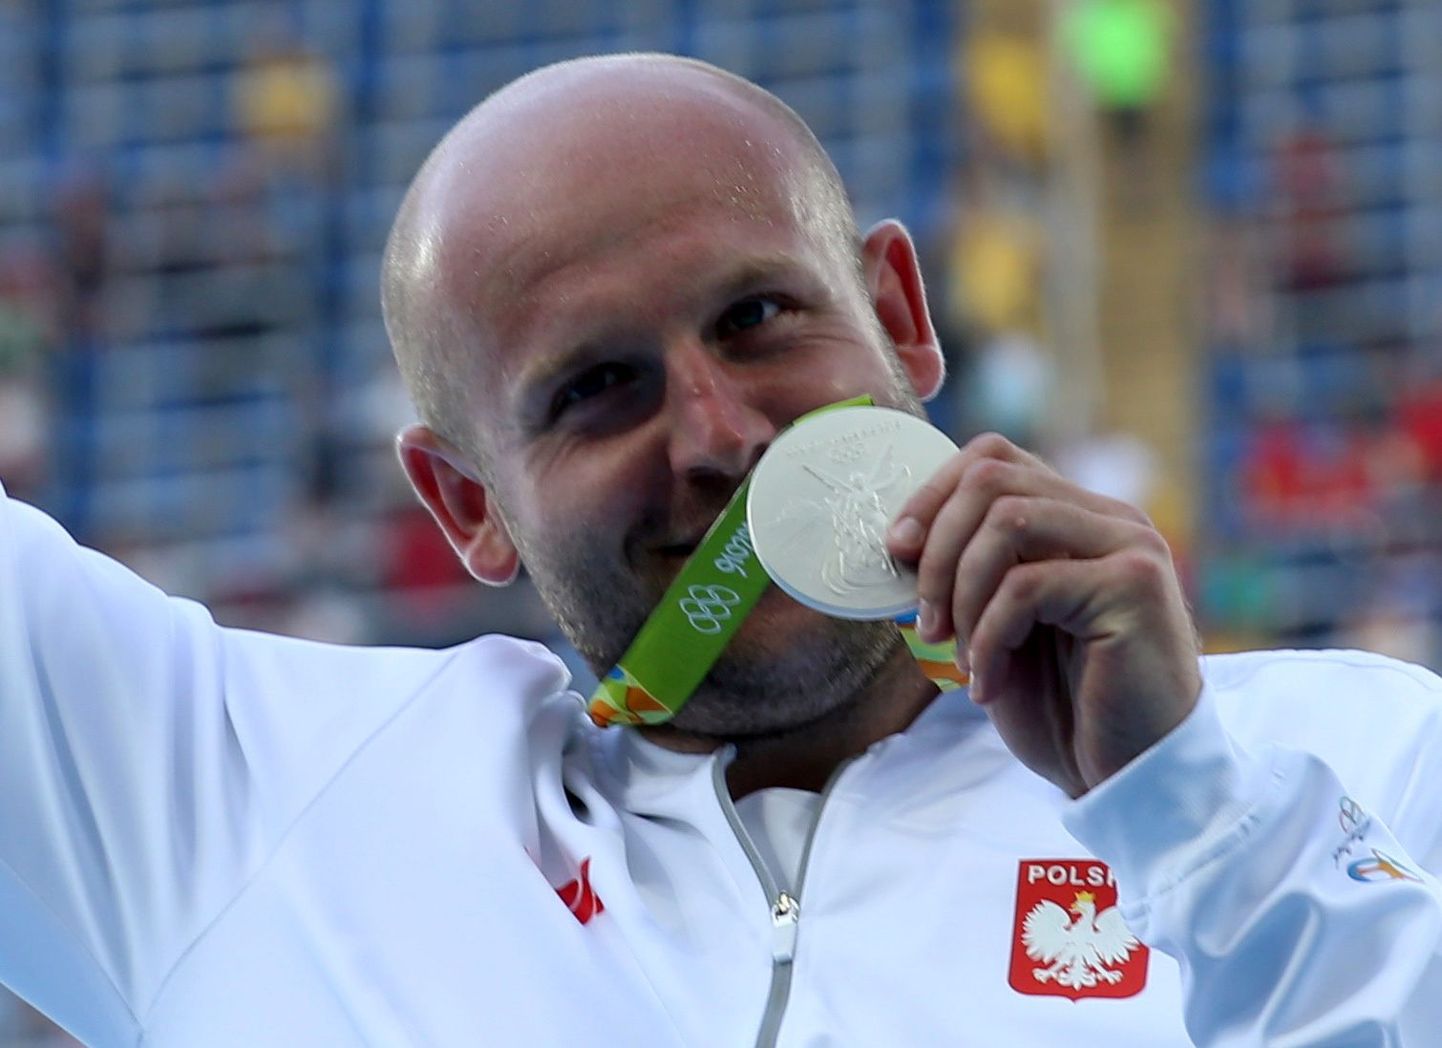 Piotr Malachowski poseerimas Rio olümpia hõbemedaliga.